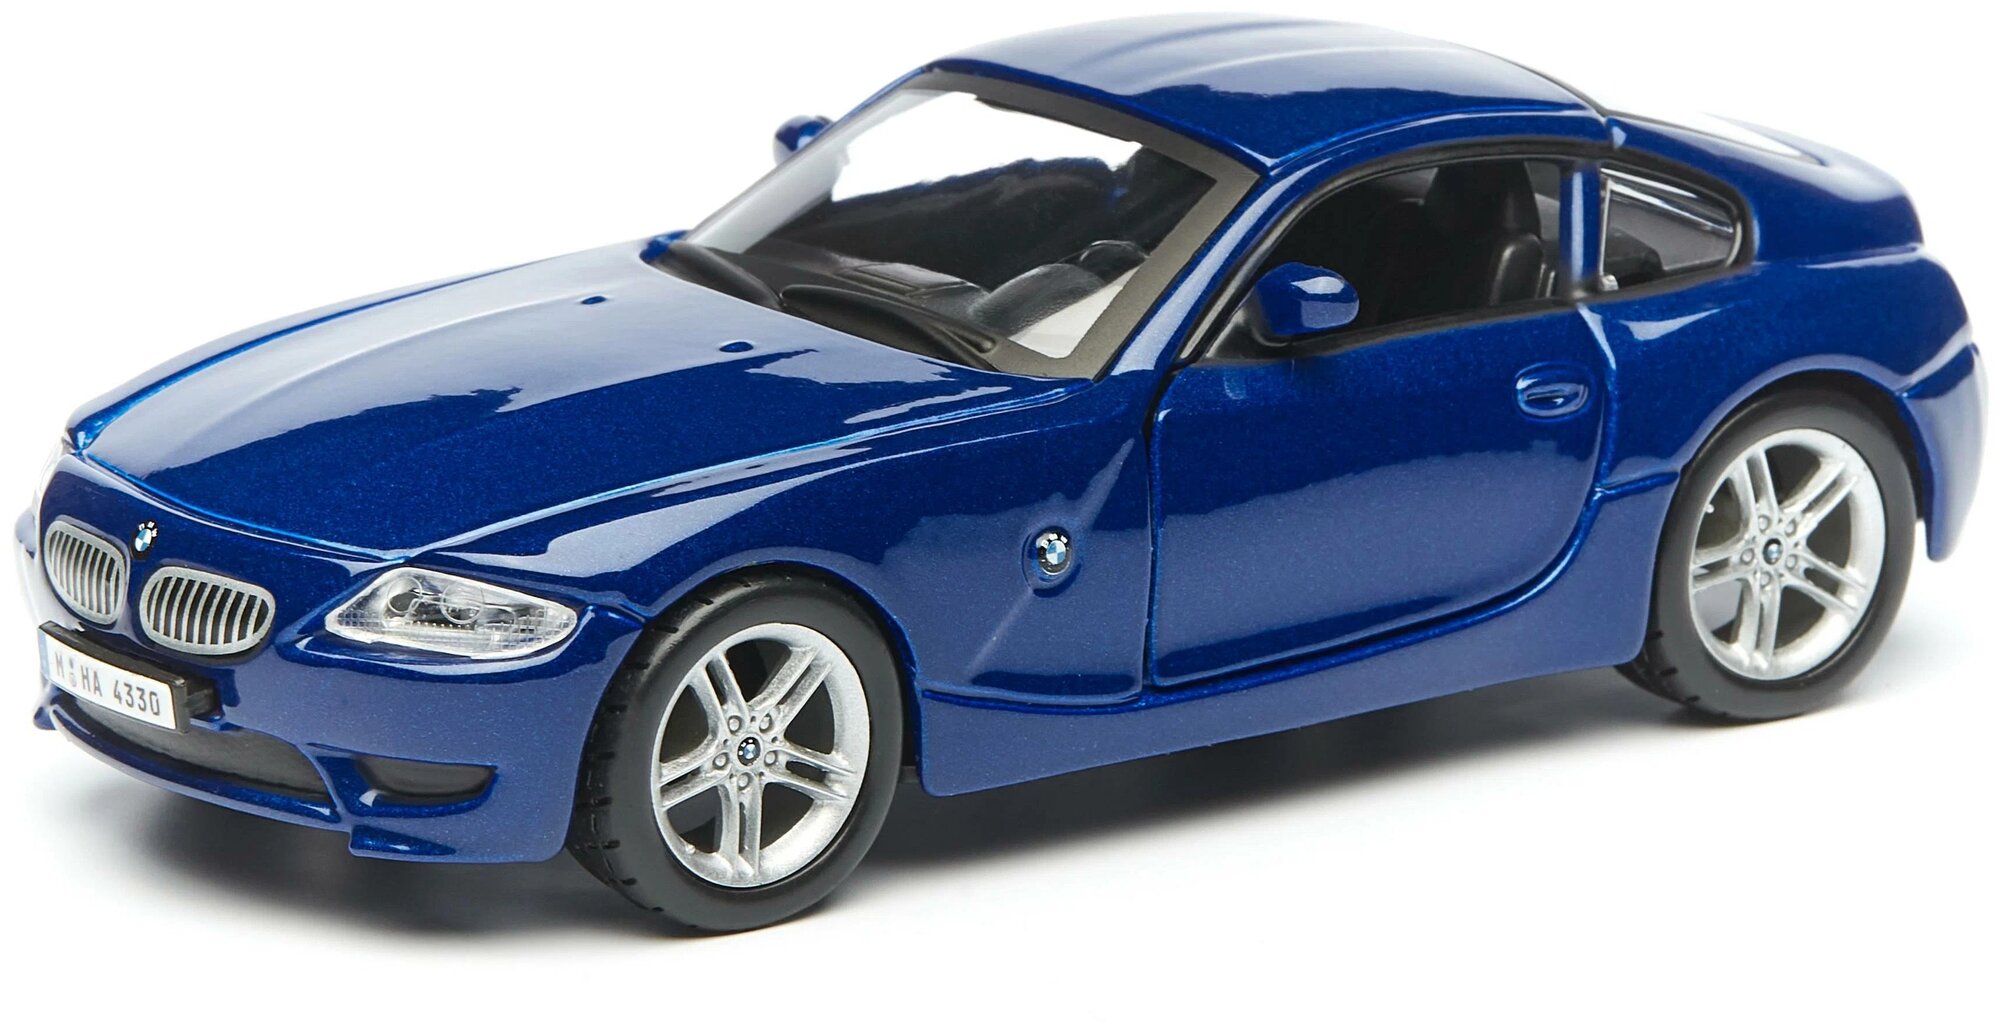 Легковой автомобиль Bburago BMW Z4 M Coupe (18-43000/13) 1:32, 12.5 см, синий